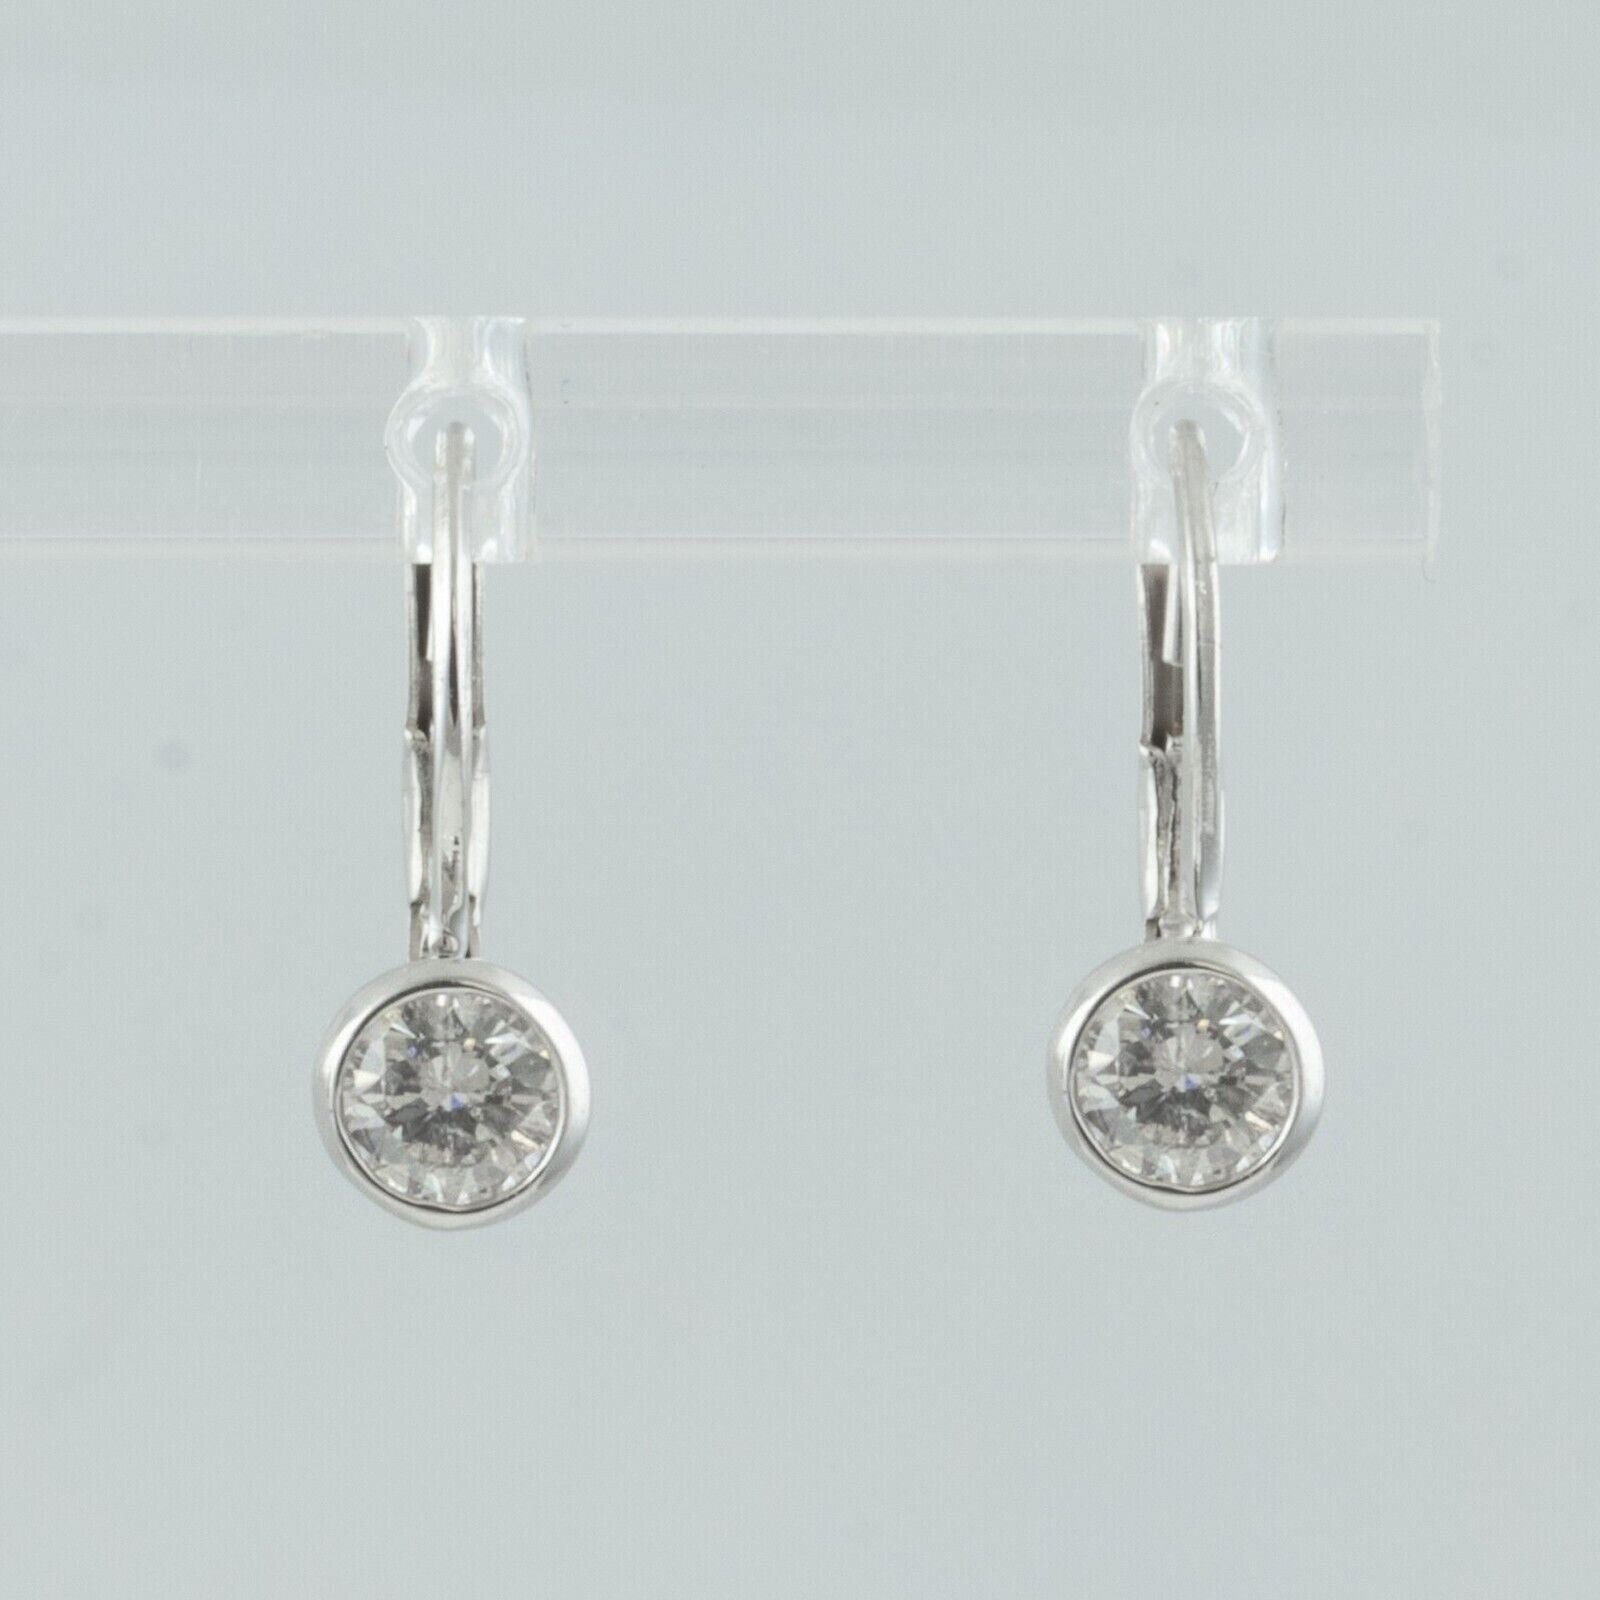 14k White Gold Diamond Dangle Drop Leverback Earrings 1.02ctw H VS2 1.8g